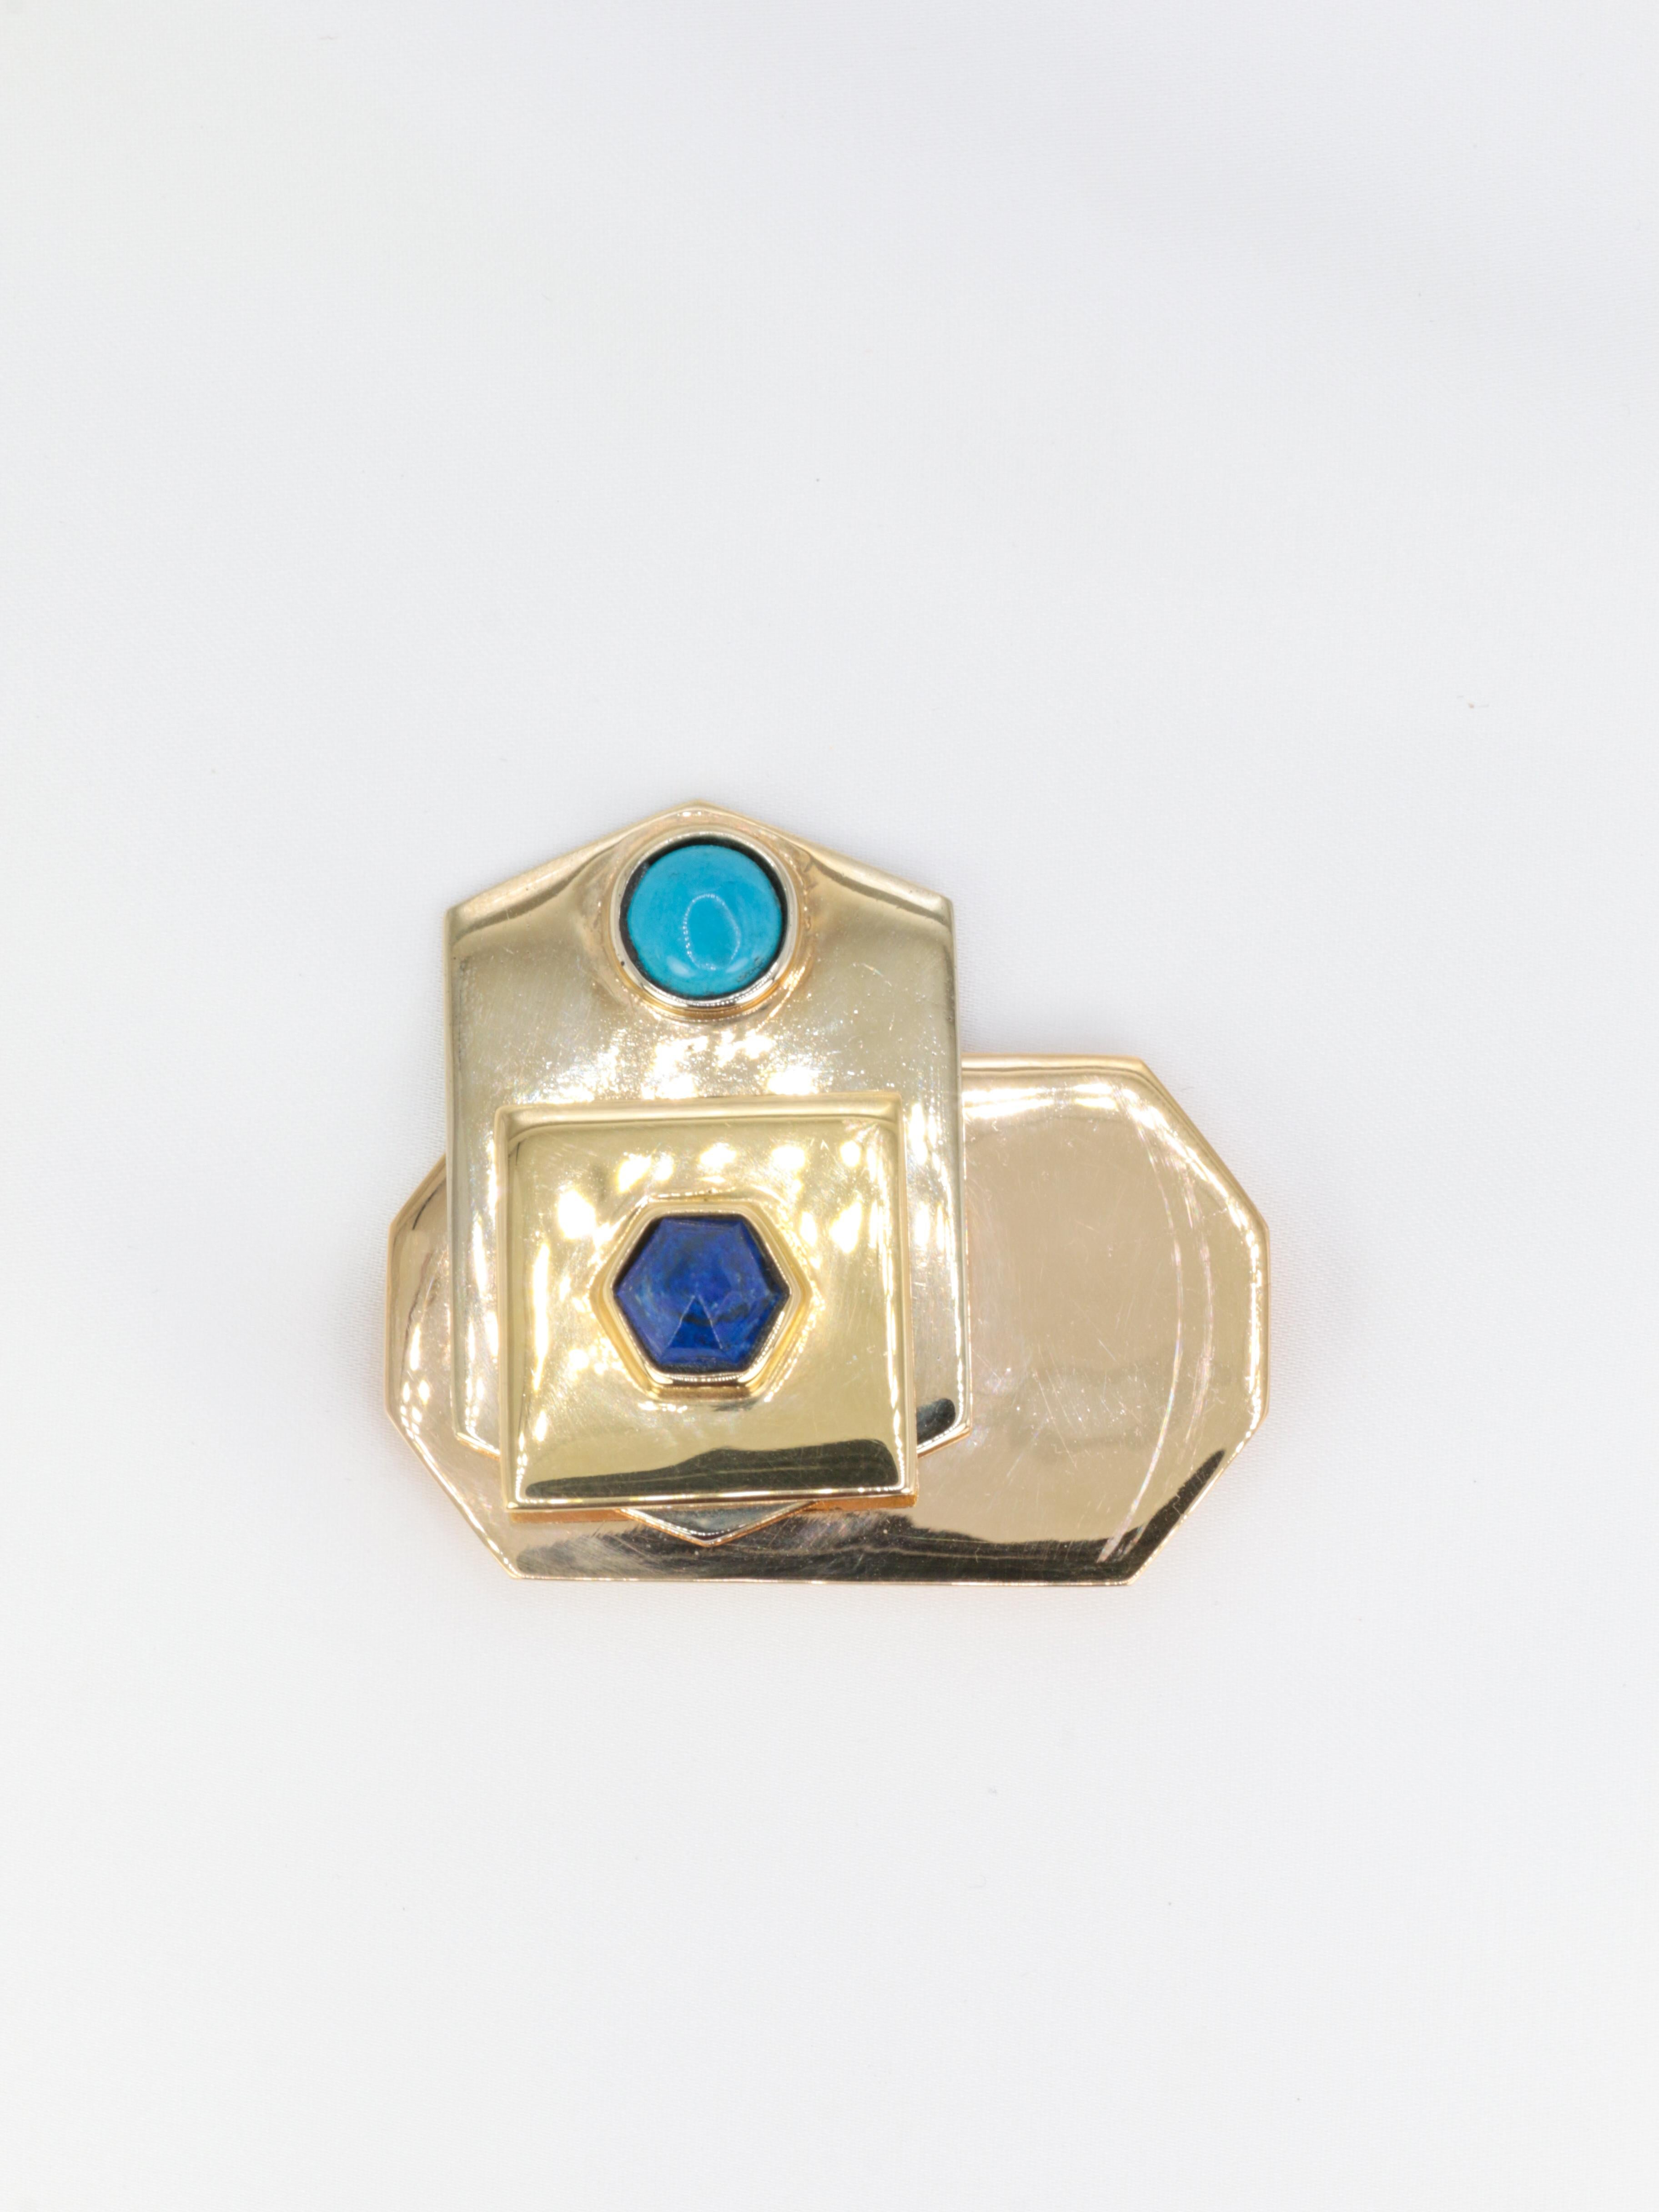 Women's or Men's Piero Dorazio Vintage Brooch in Gold, Turquoise and Lapis Lazuli - Artcurial Edi For Sale